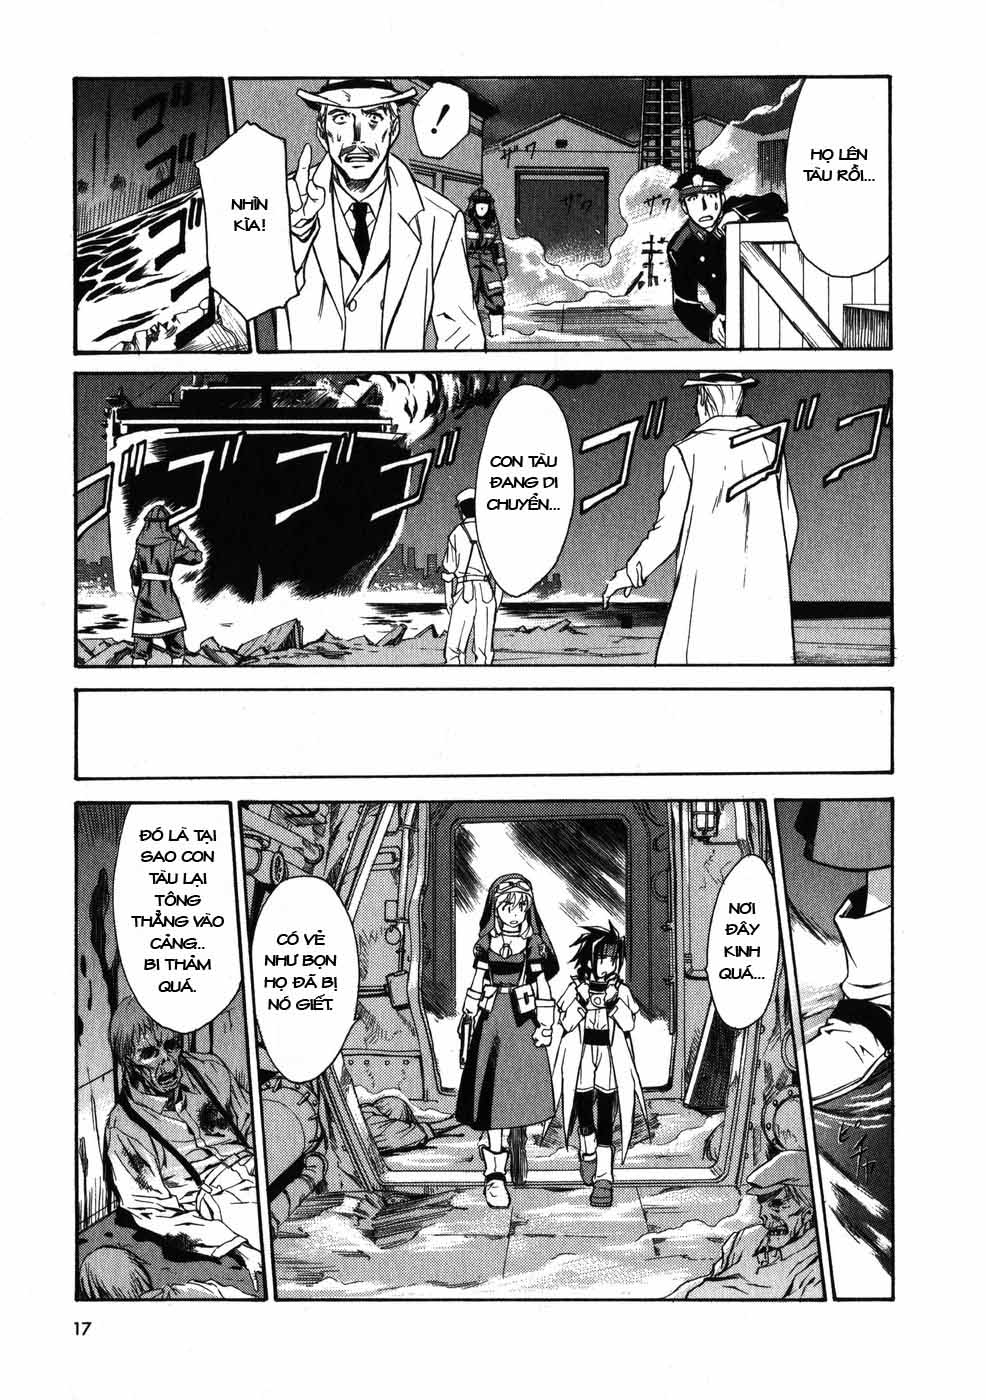 [Manga] Chrono Crusade (Đọc online tại SSF) - Page 2 CHRNO-CRUSADE-01-017